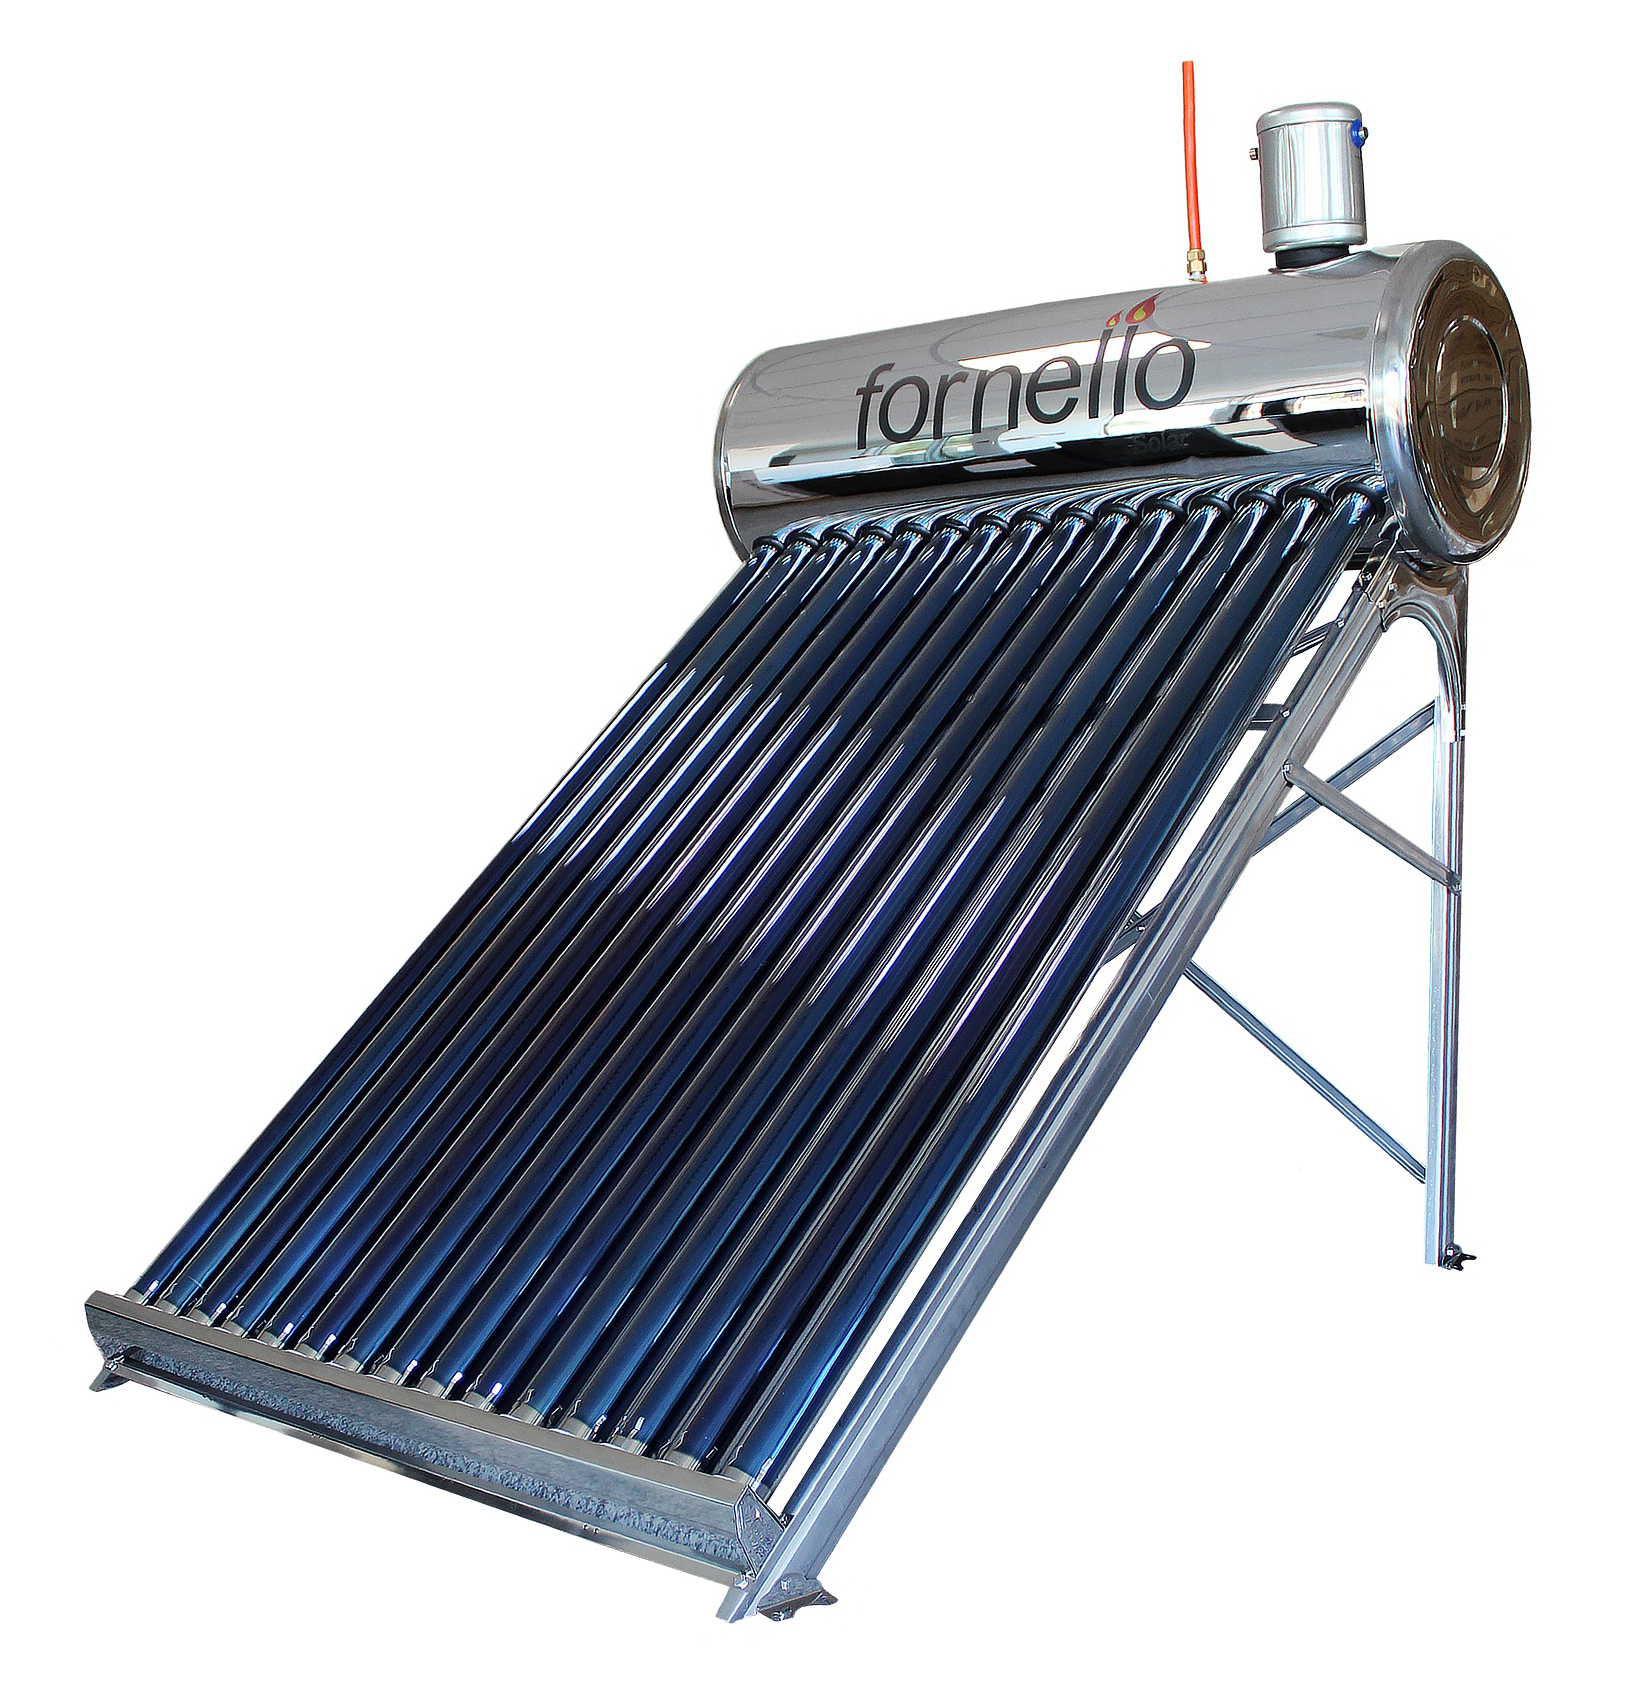 Panou solar nepresurizat Fornello pentru producere apa calda, cu rezervor inox 165 litri si 20 tuburi vidate fornello imagine